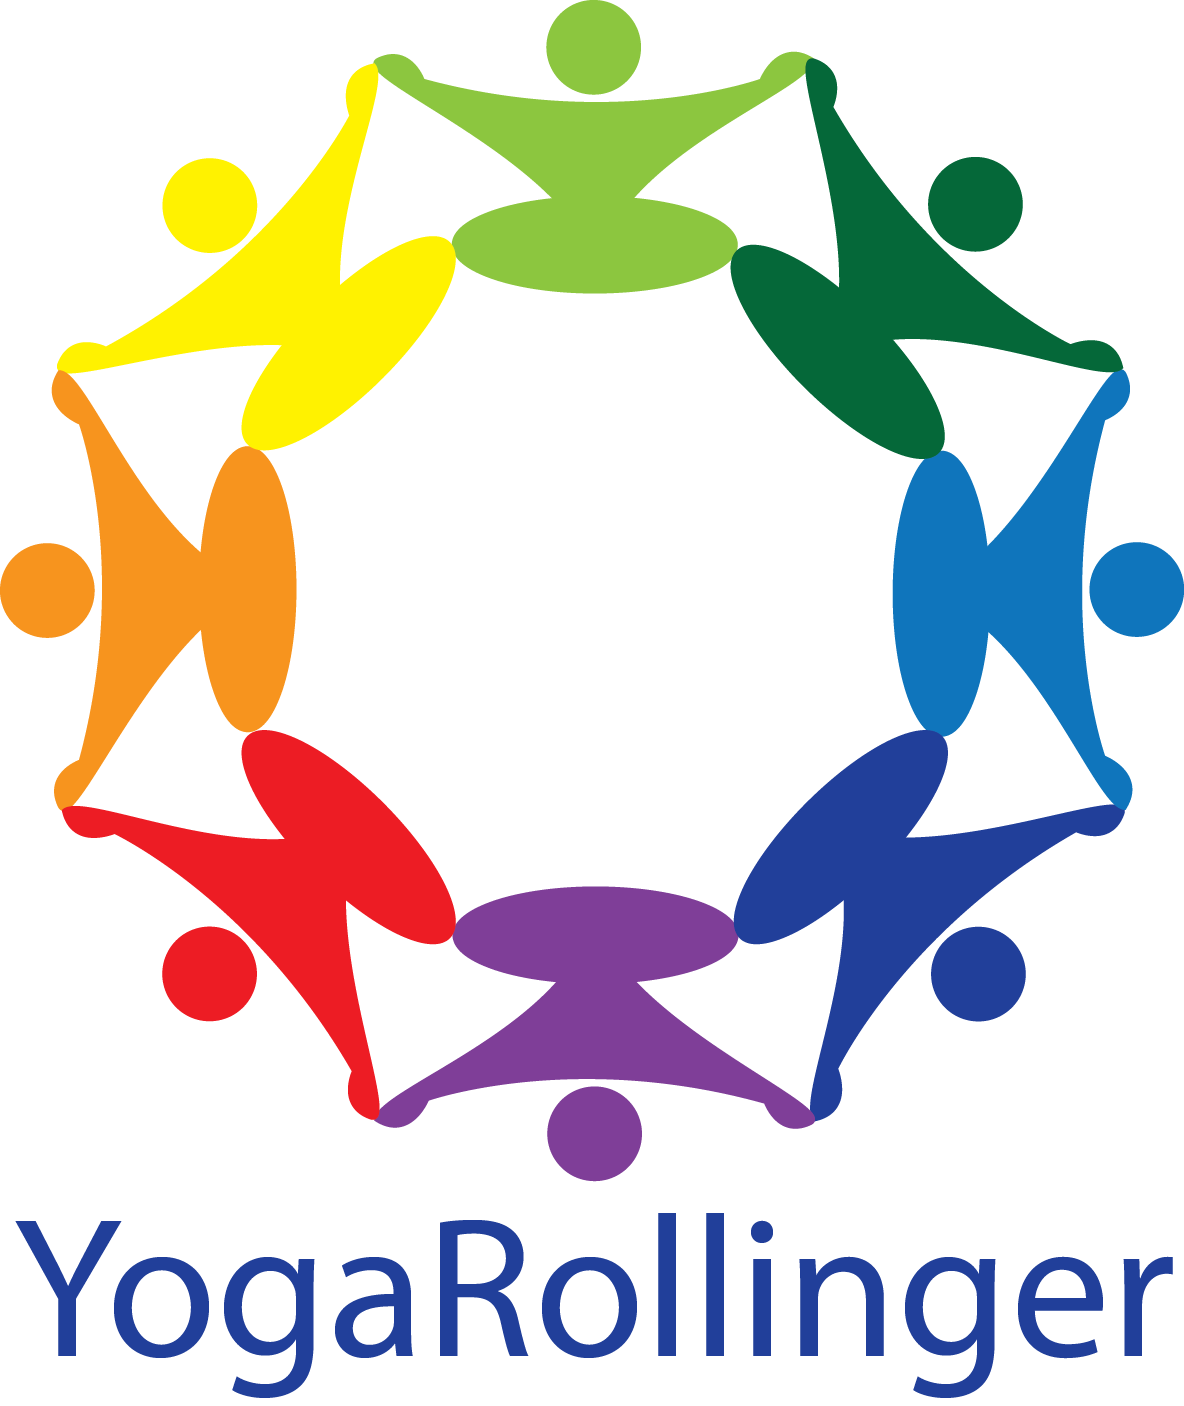 YogaRollinger logo